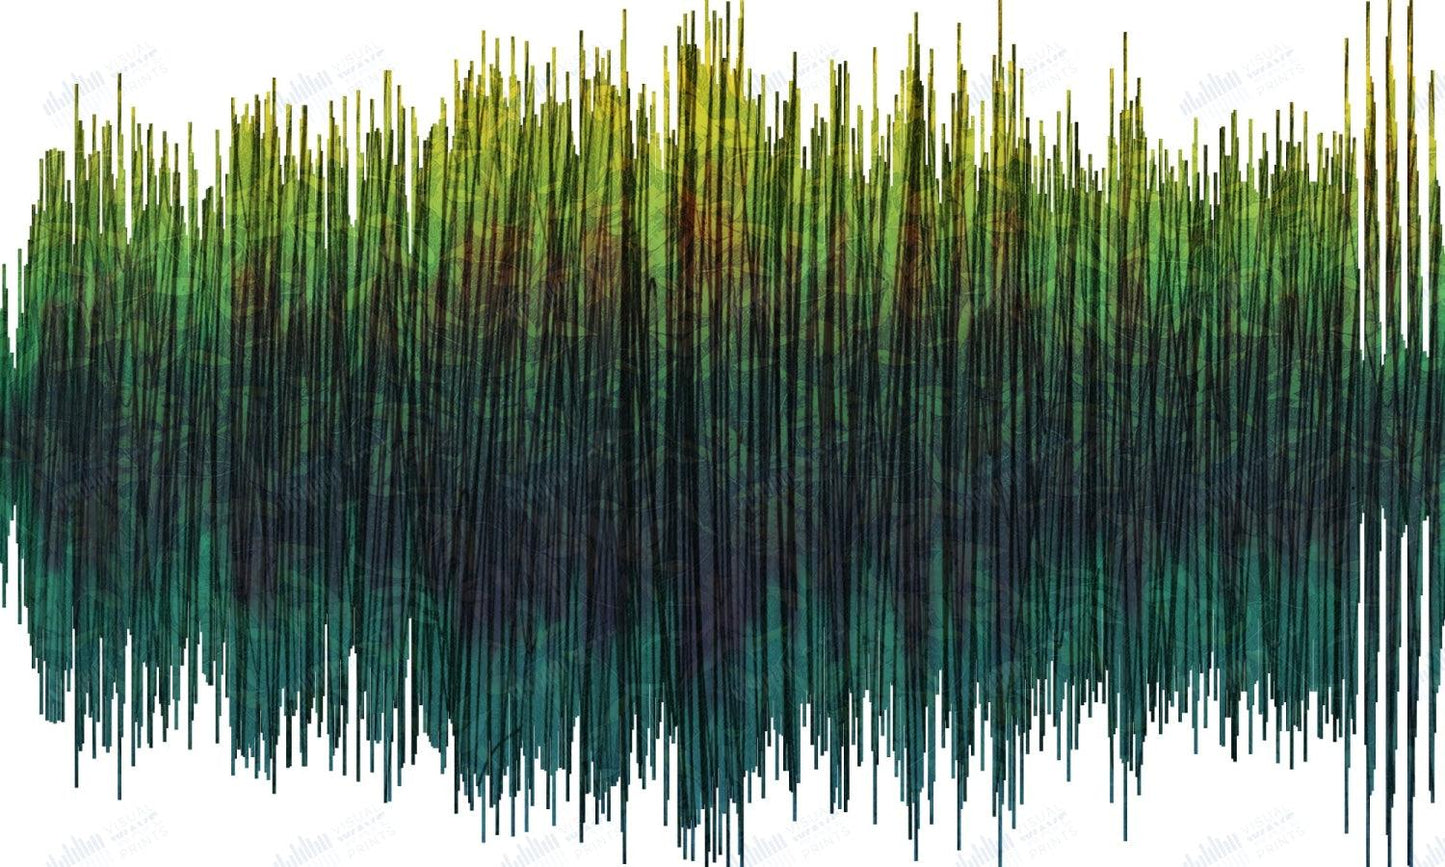 Falling Slowly by Glen Hansard - Visual Wave Prints